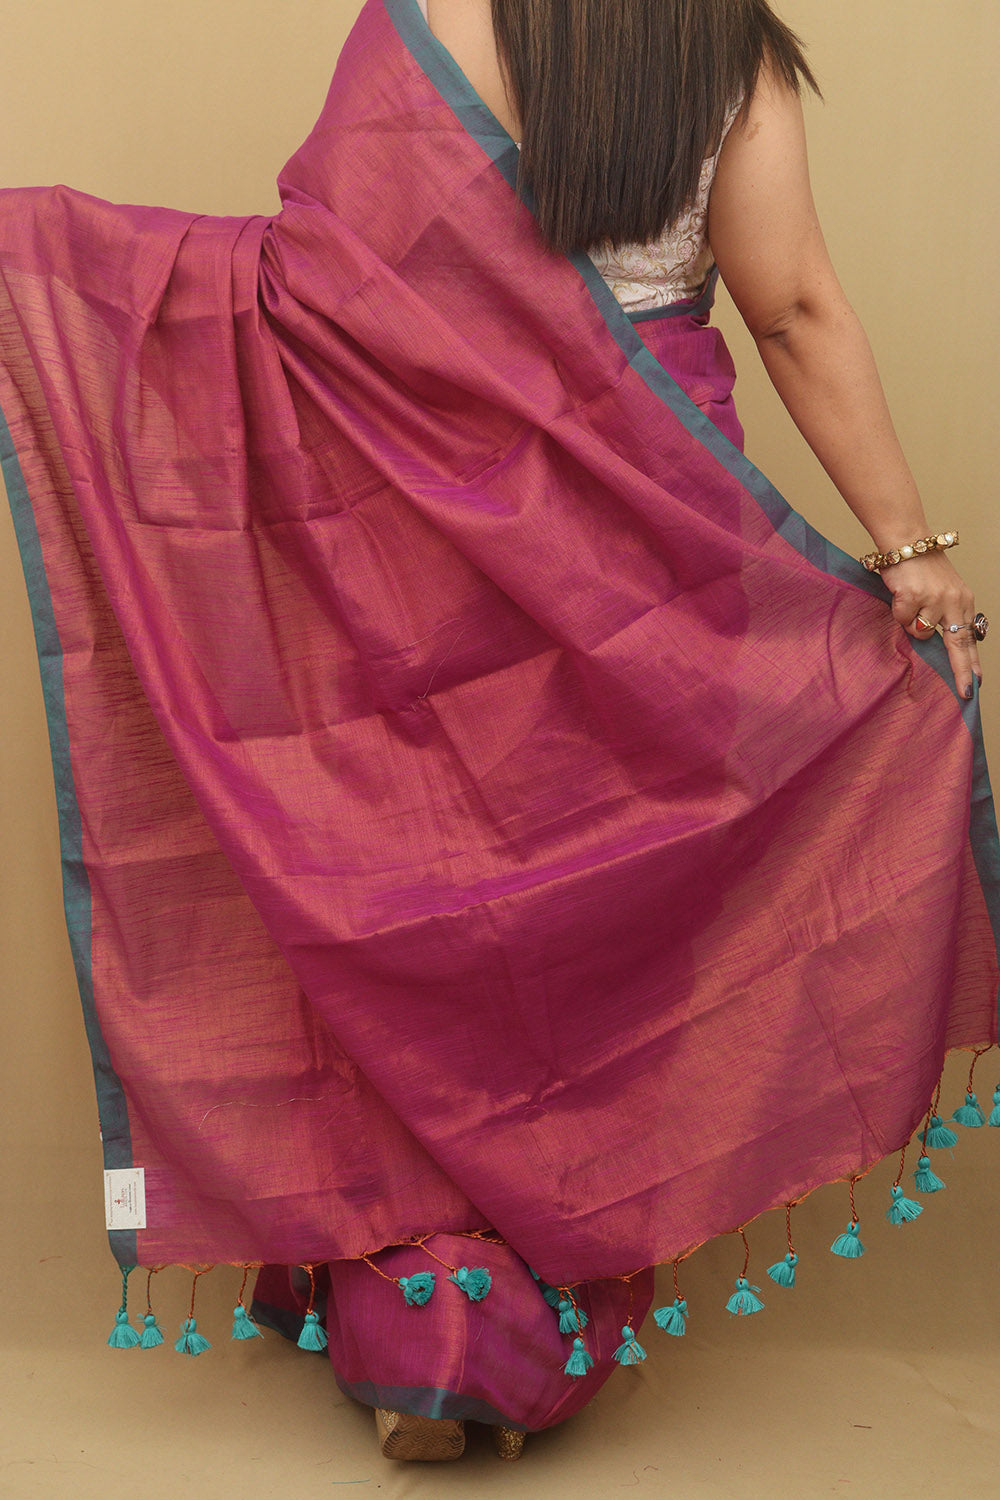 Elegant Pink Bengal Plain Tissue Cotton Saree - Luxurion World